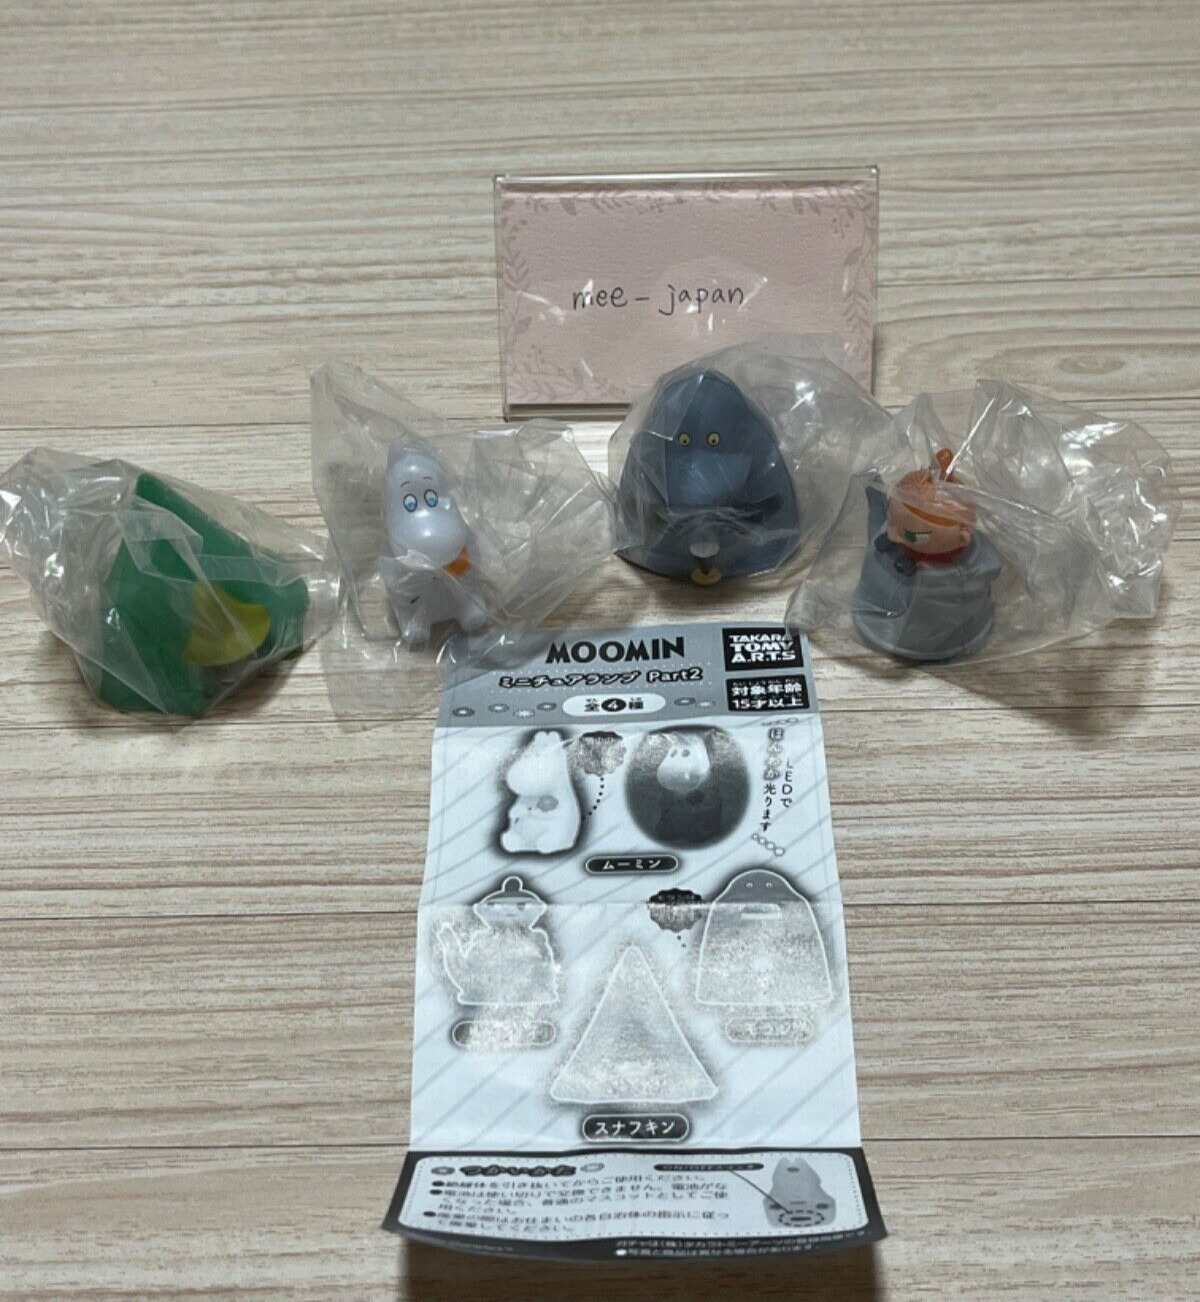 Moomin Miniature Lamps capsule toys gashapon 4types complete set Japan